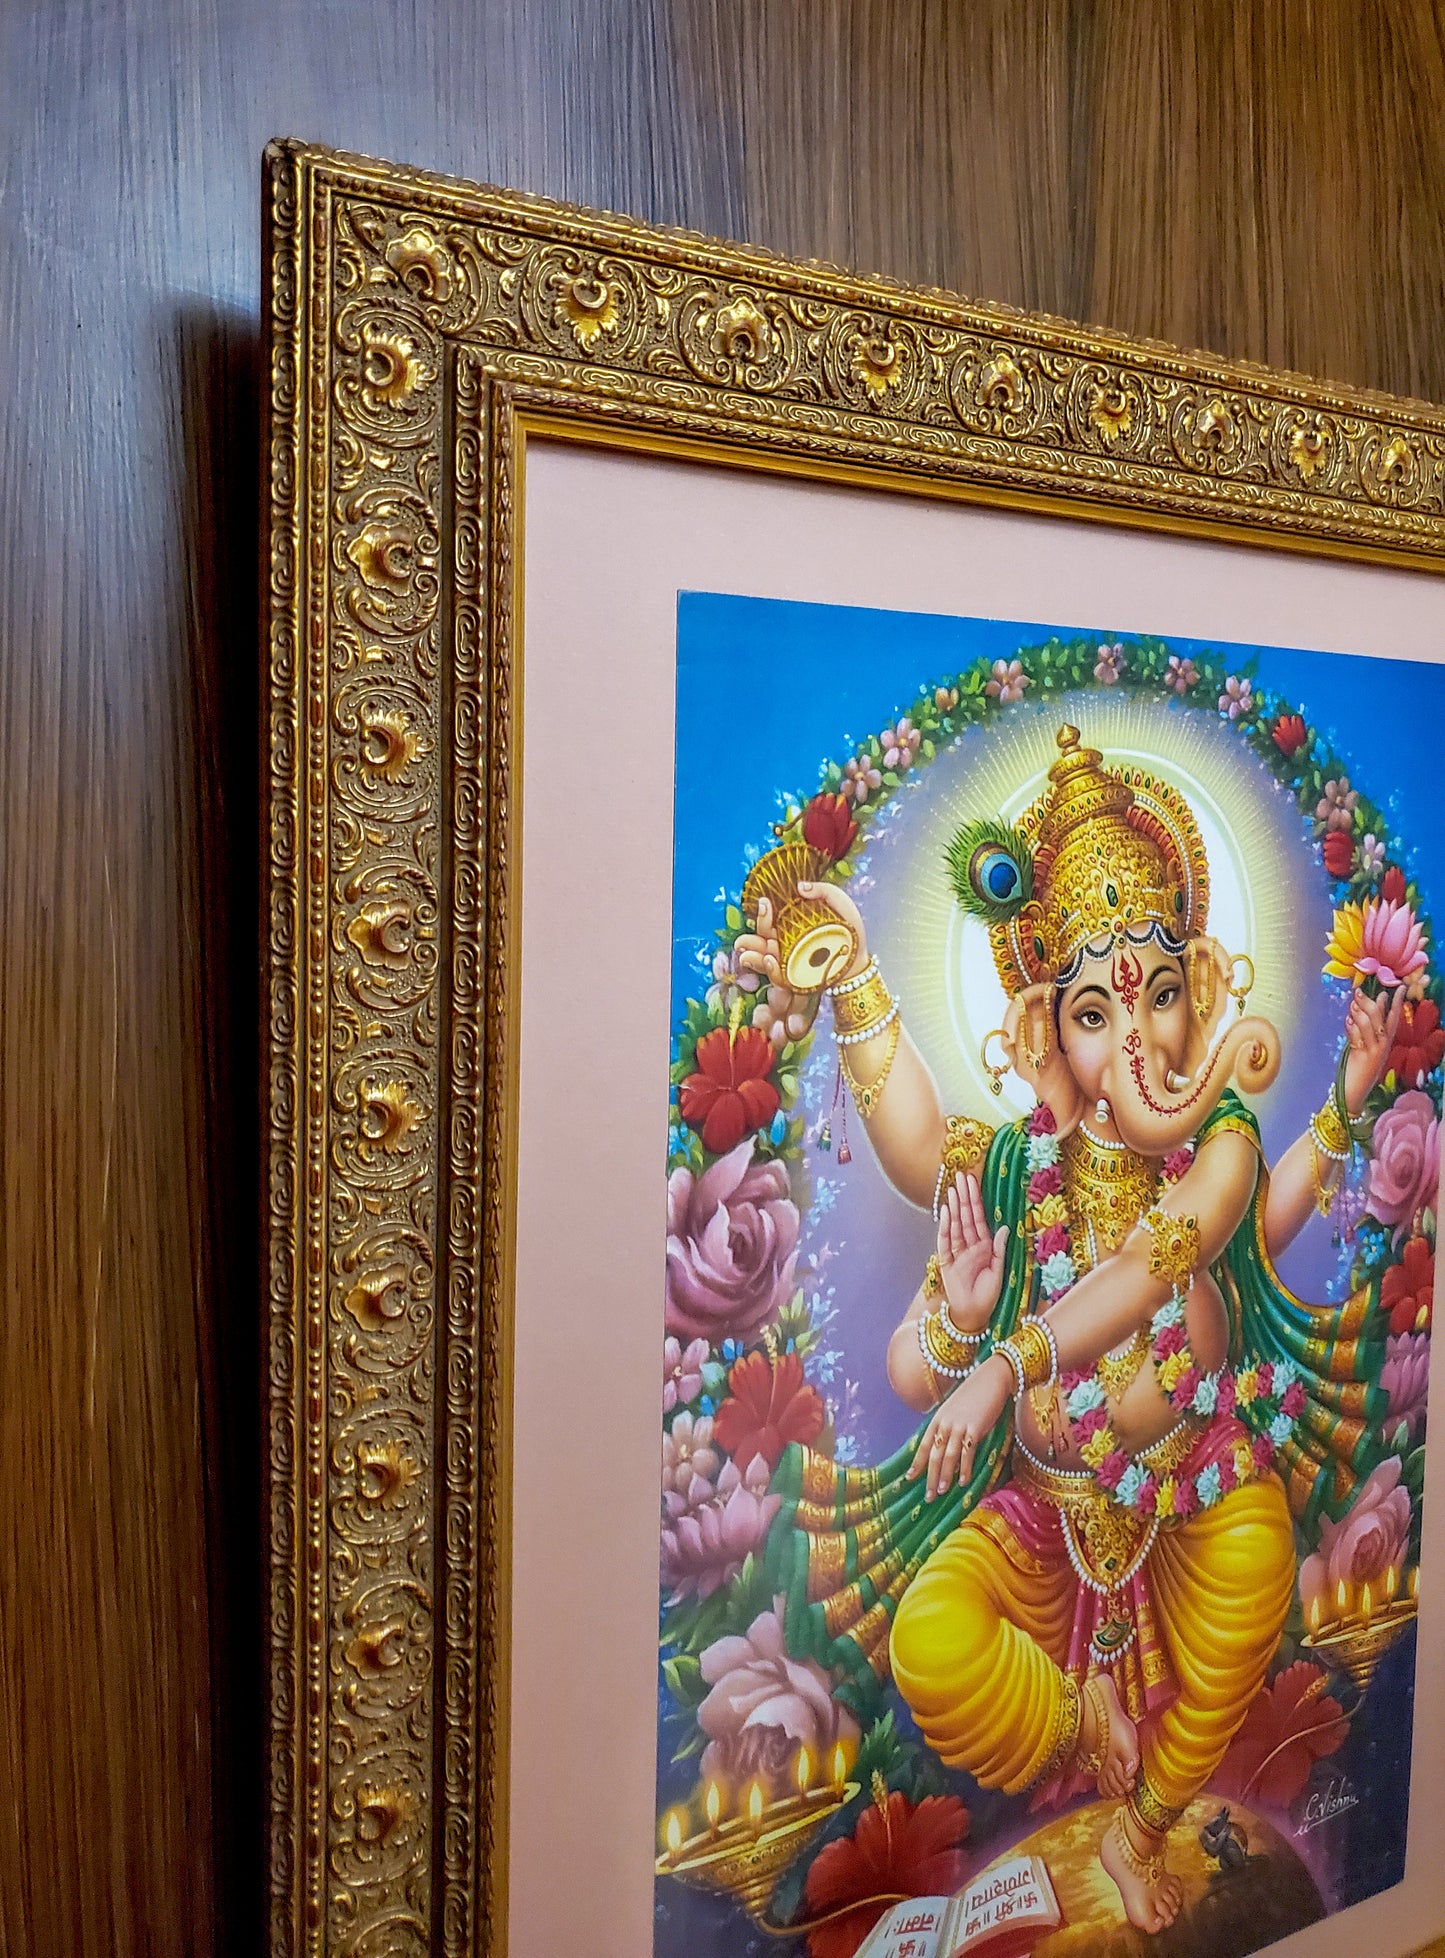 Ganesha Poster Wall Hanging Decor Set in Ornate Golden Gorgeous Frame 23.5"